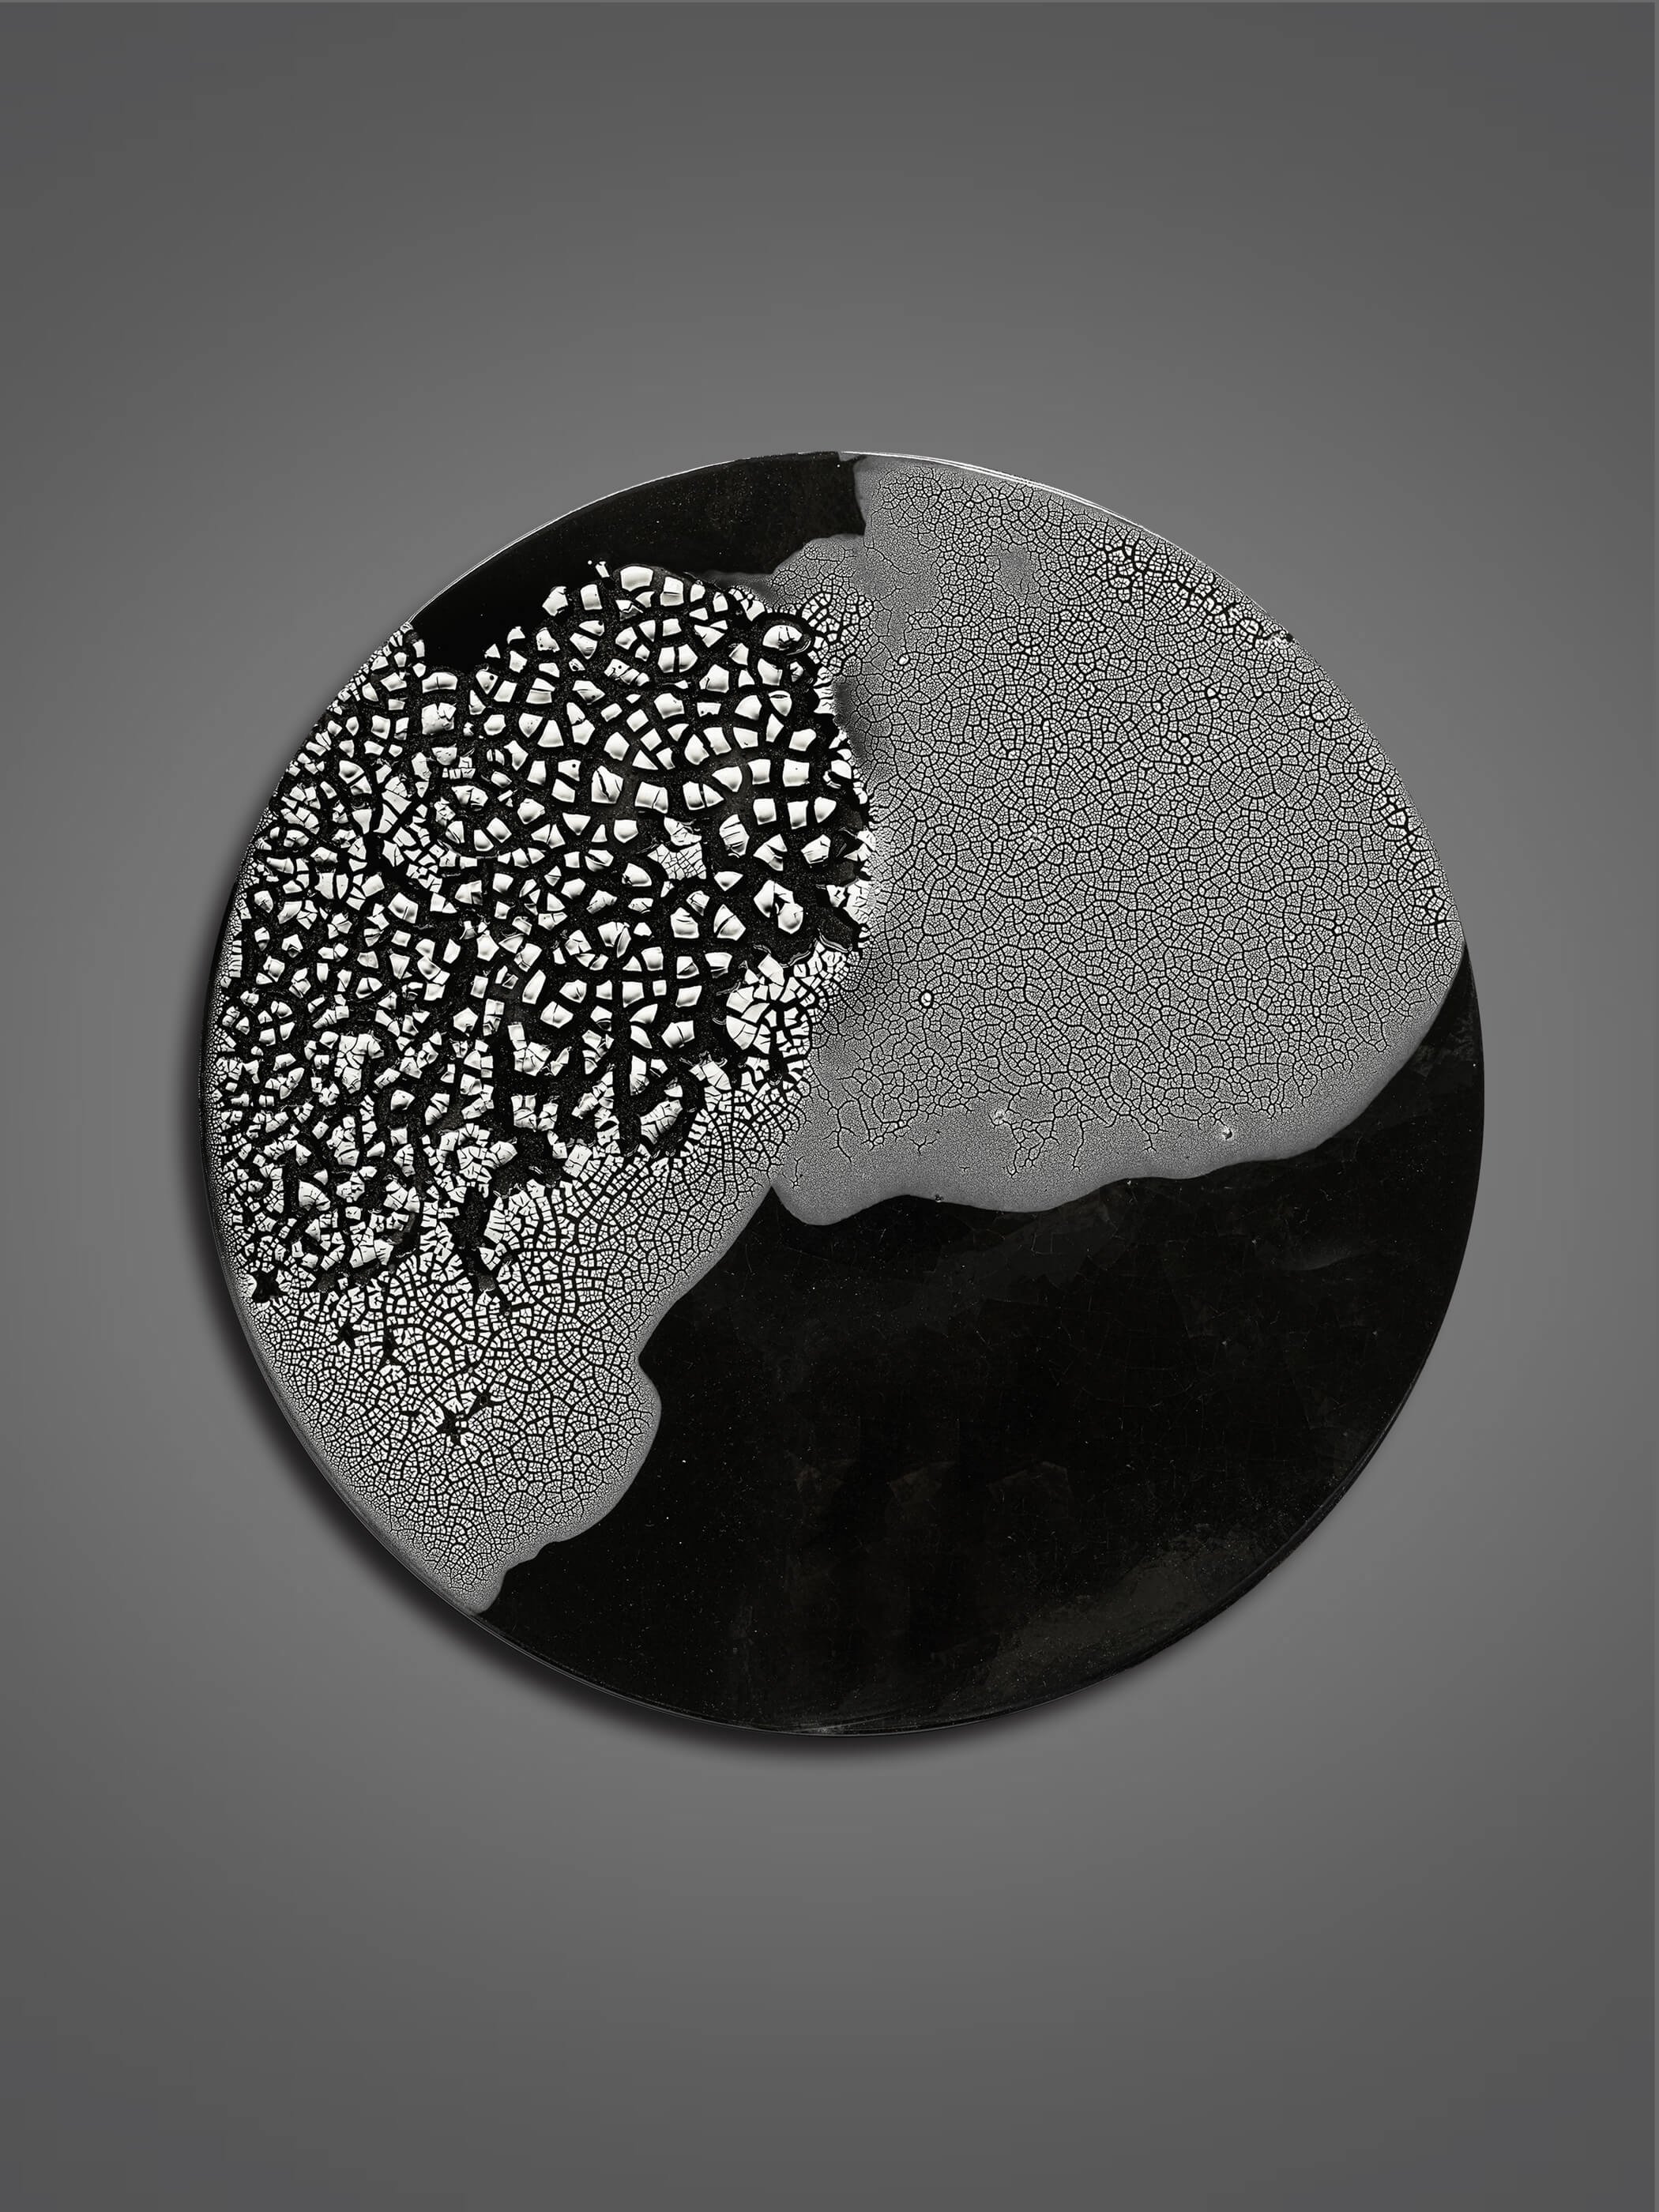 elisa-strozyk-ceramic-tables-contemporary-surface.jpg